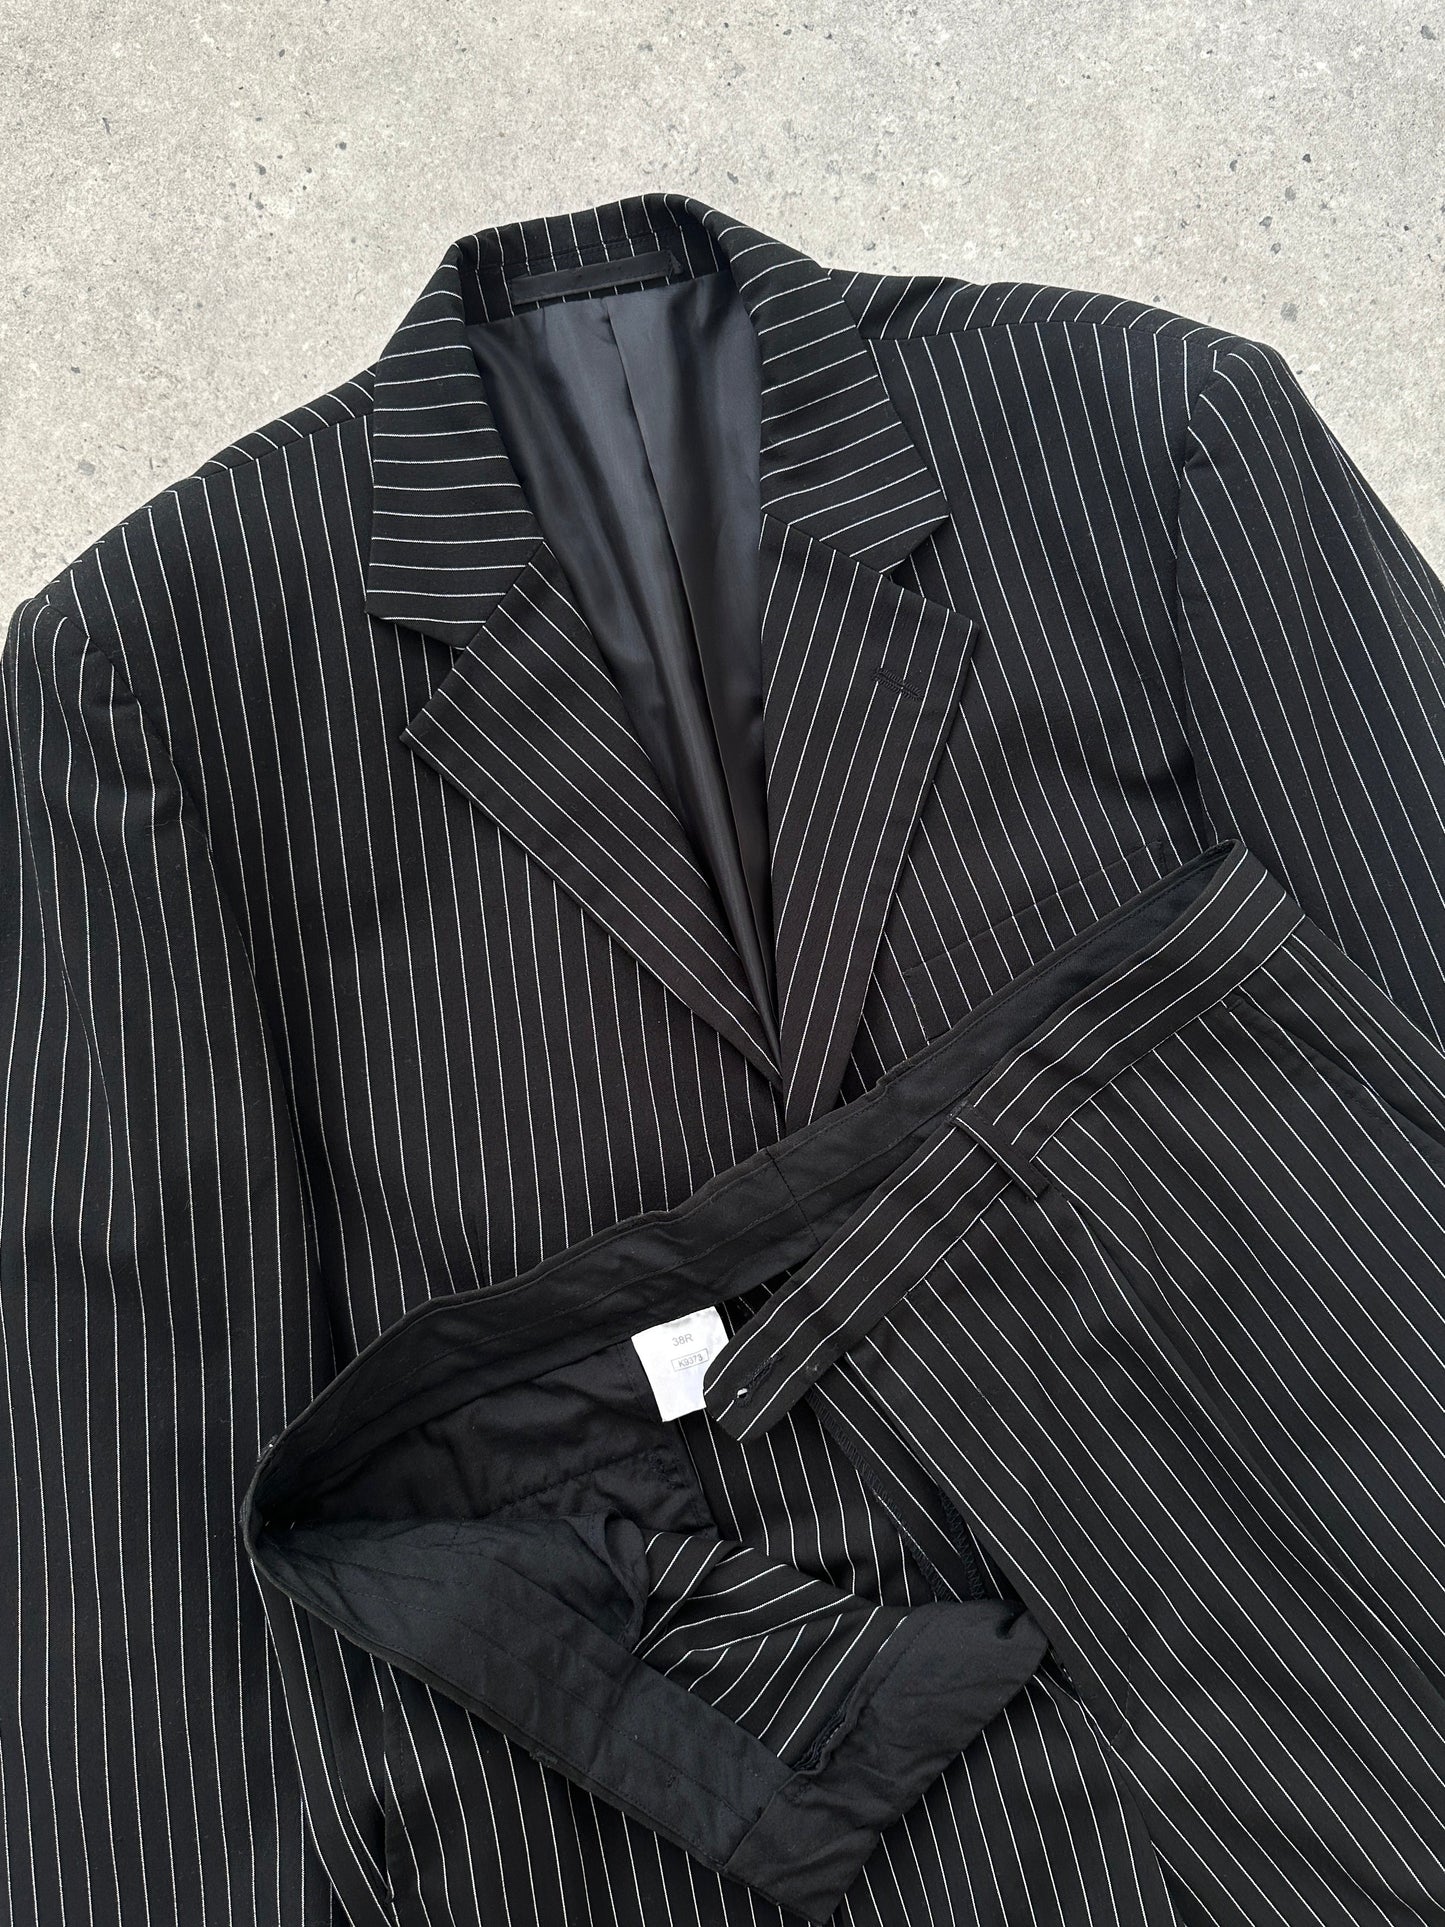 Vintage Pinstripe Single Breasted Suit - 40R/W36